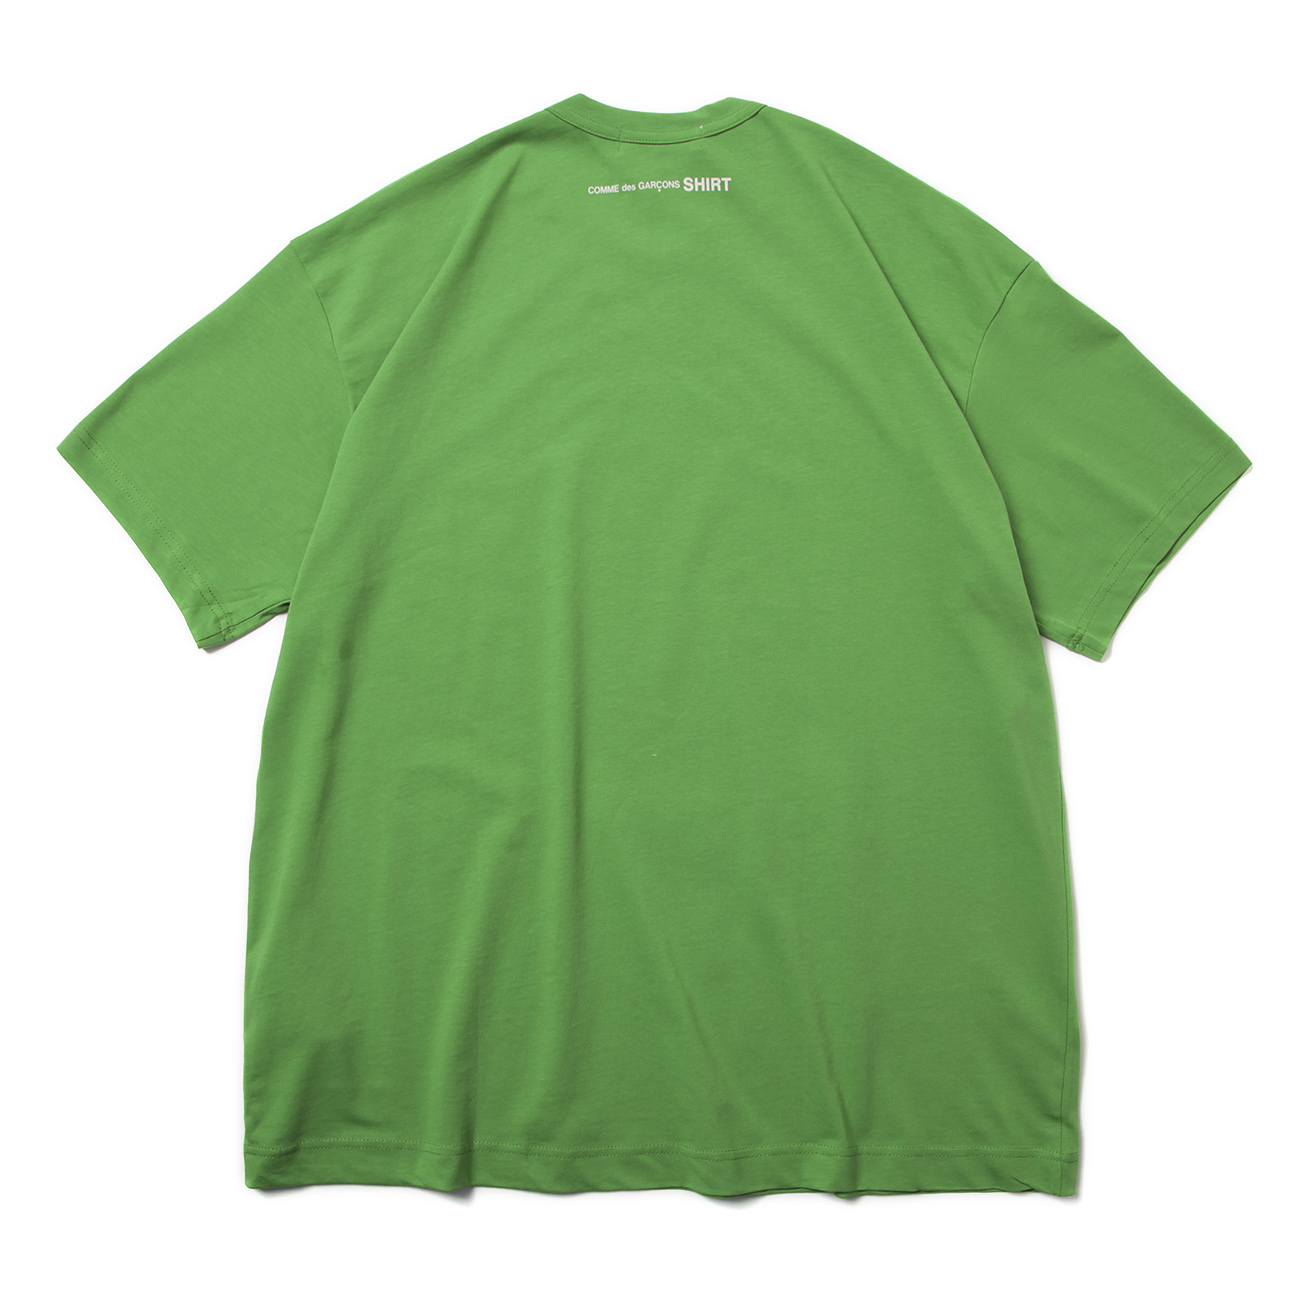 cotton jersey plain 165gr with CDG SHIRT logo back - Green